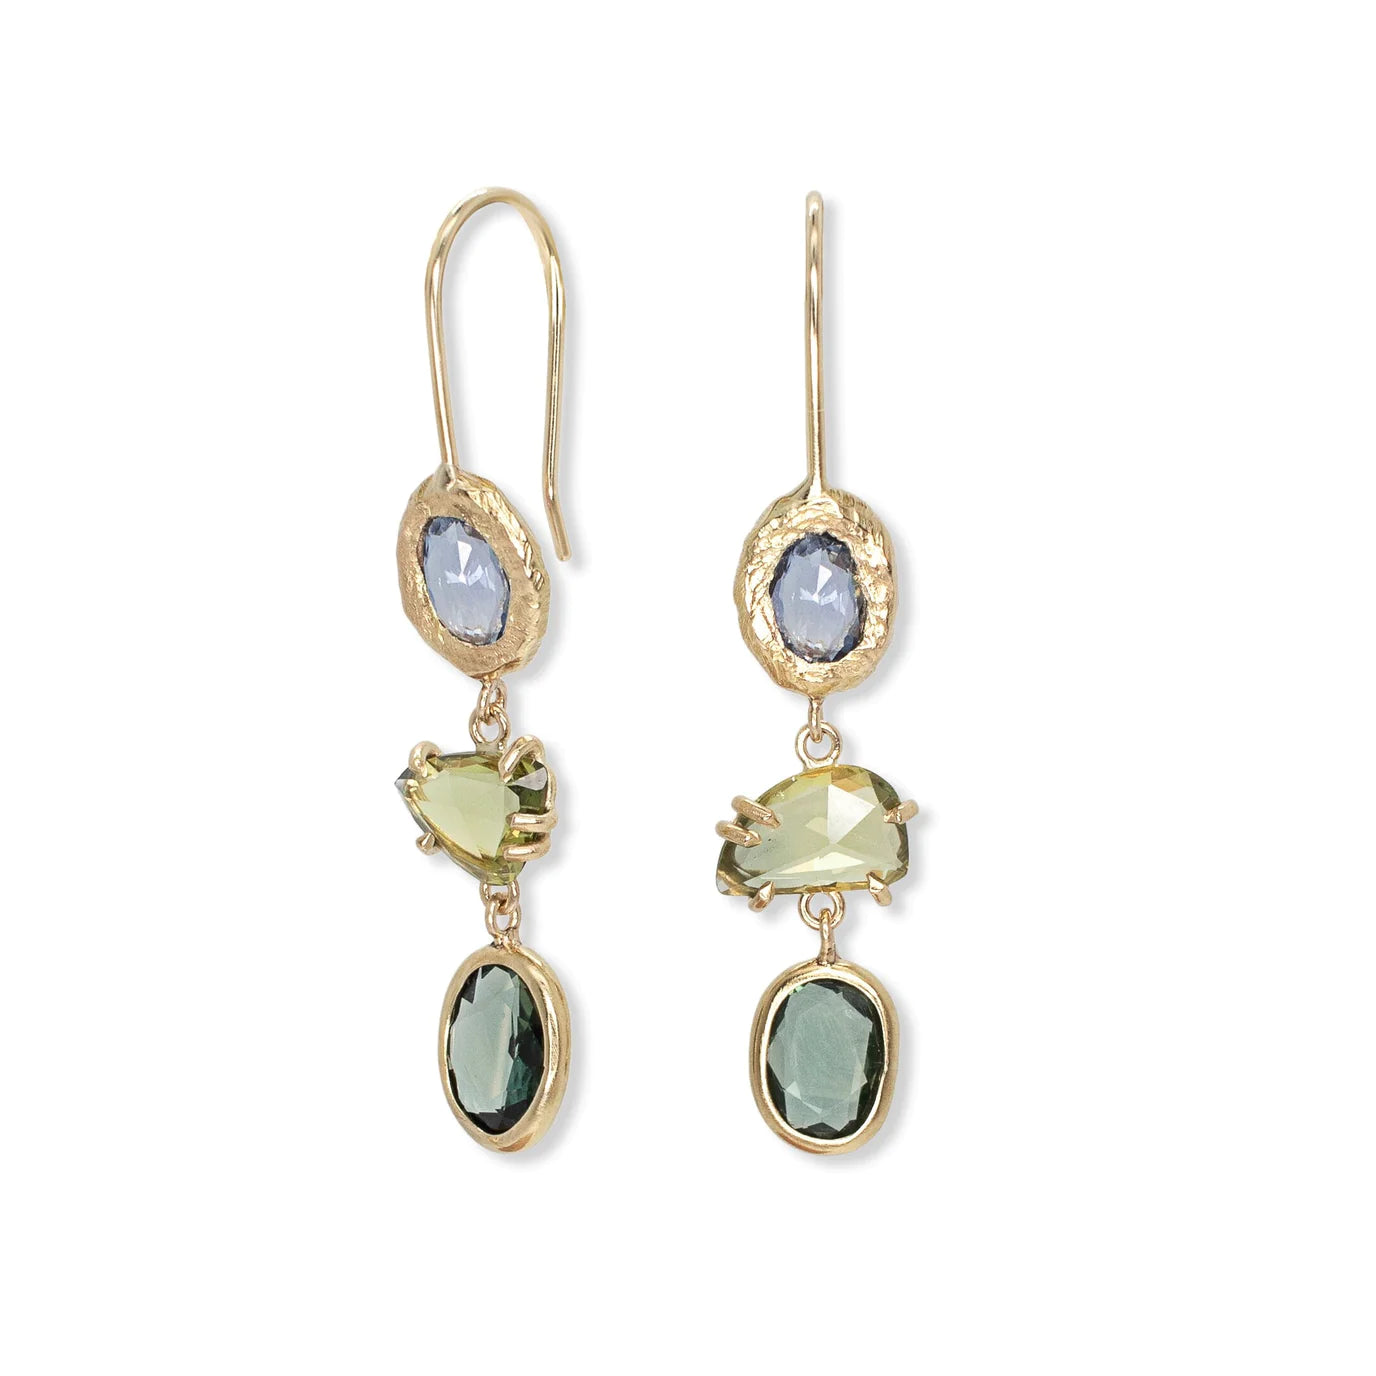 triple drop earrings - cool rainbow sapphires